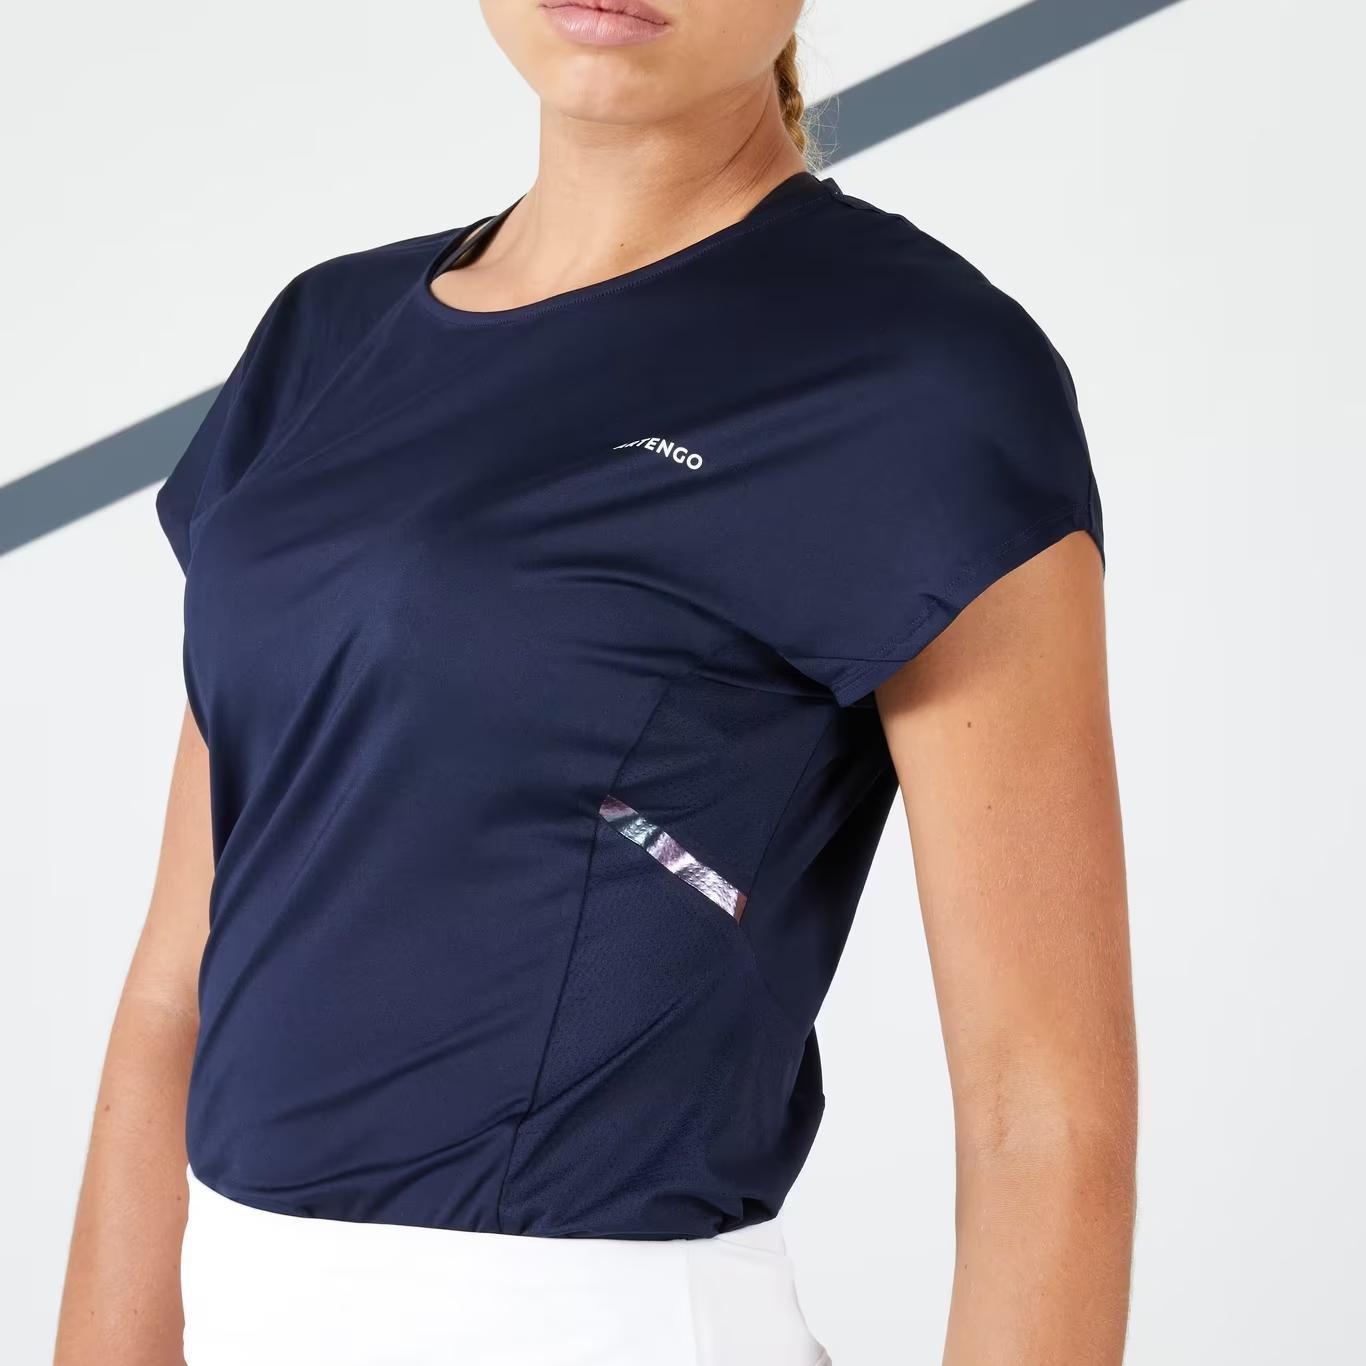 ARTENGO - Women Dry Crew Neck Soft Tennis T-Shirt Dry 500, Blue